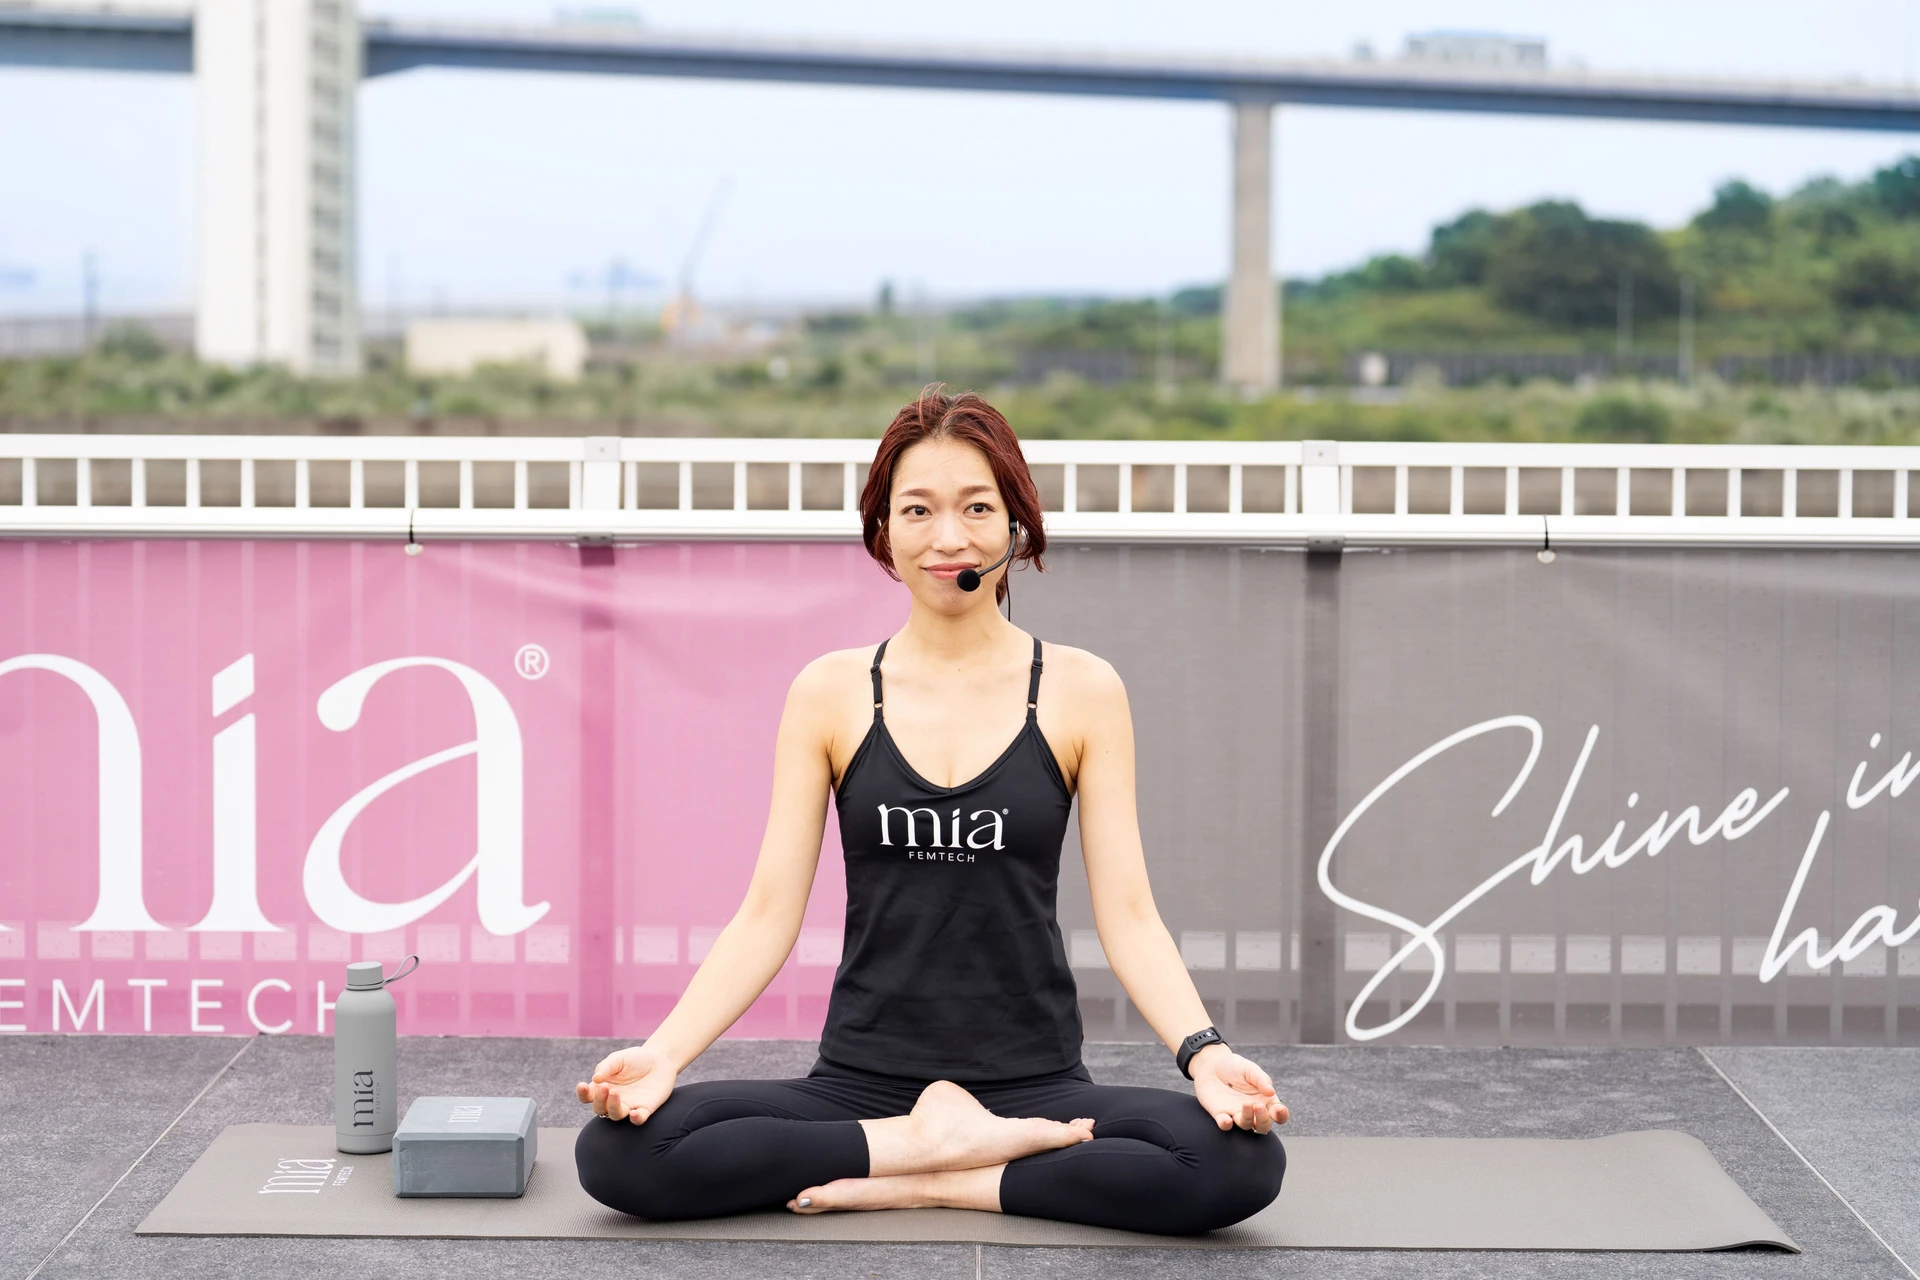 Enhancing women’s confidence and harmony: Mia Femtech™ leads empowering yoga gathering